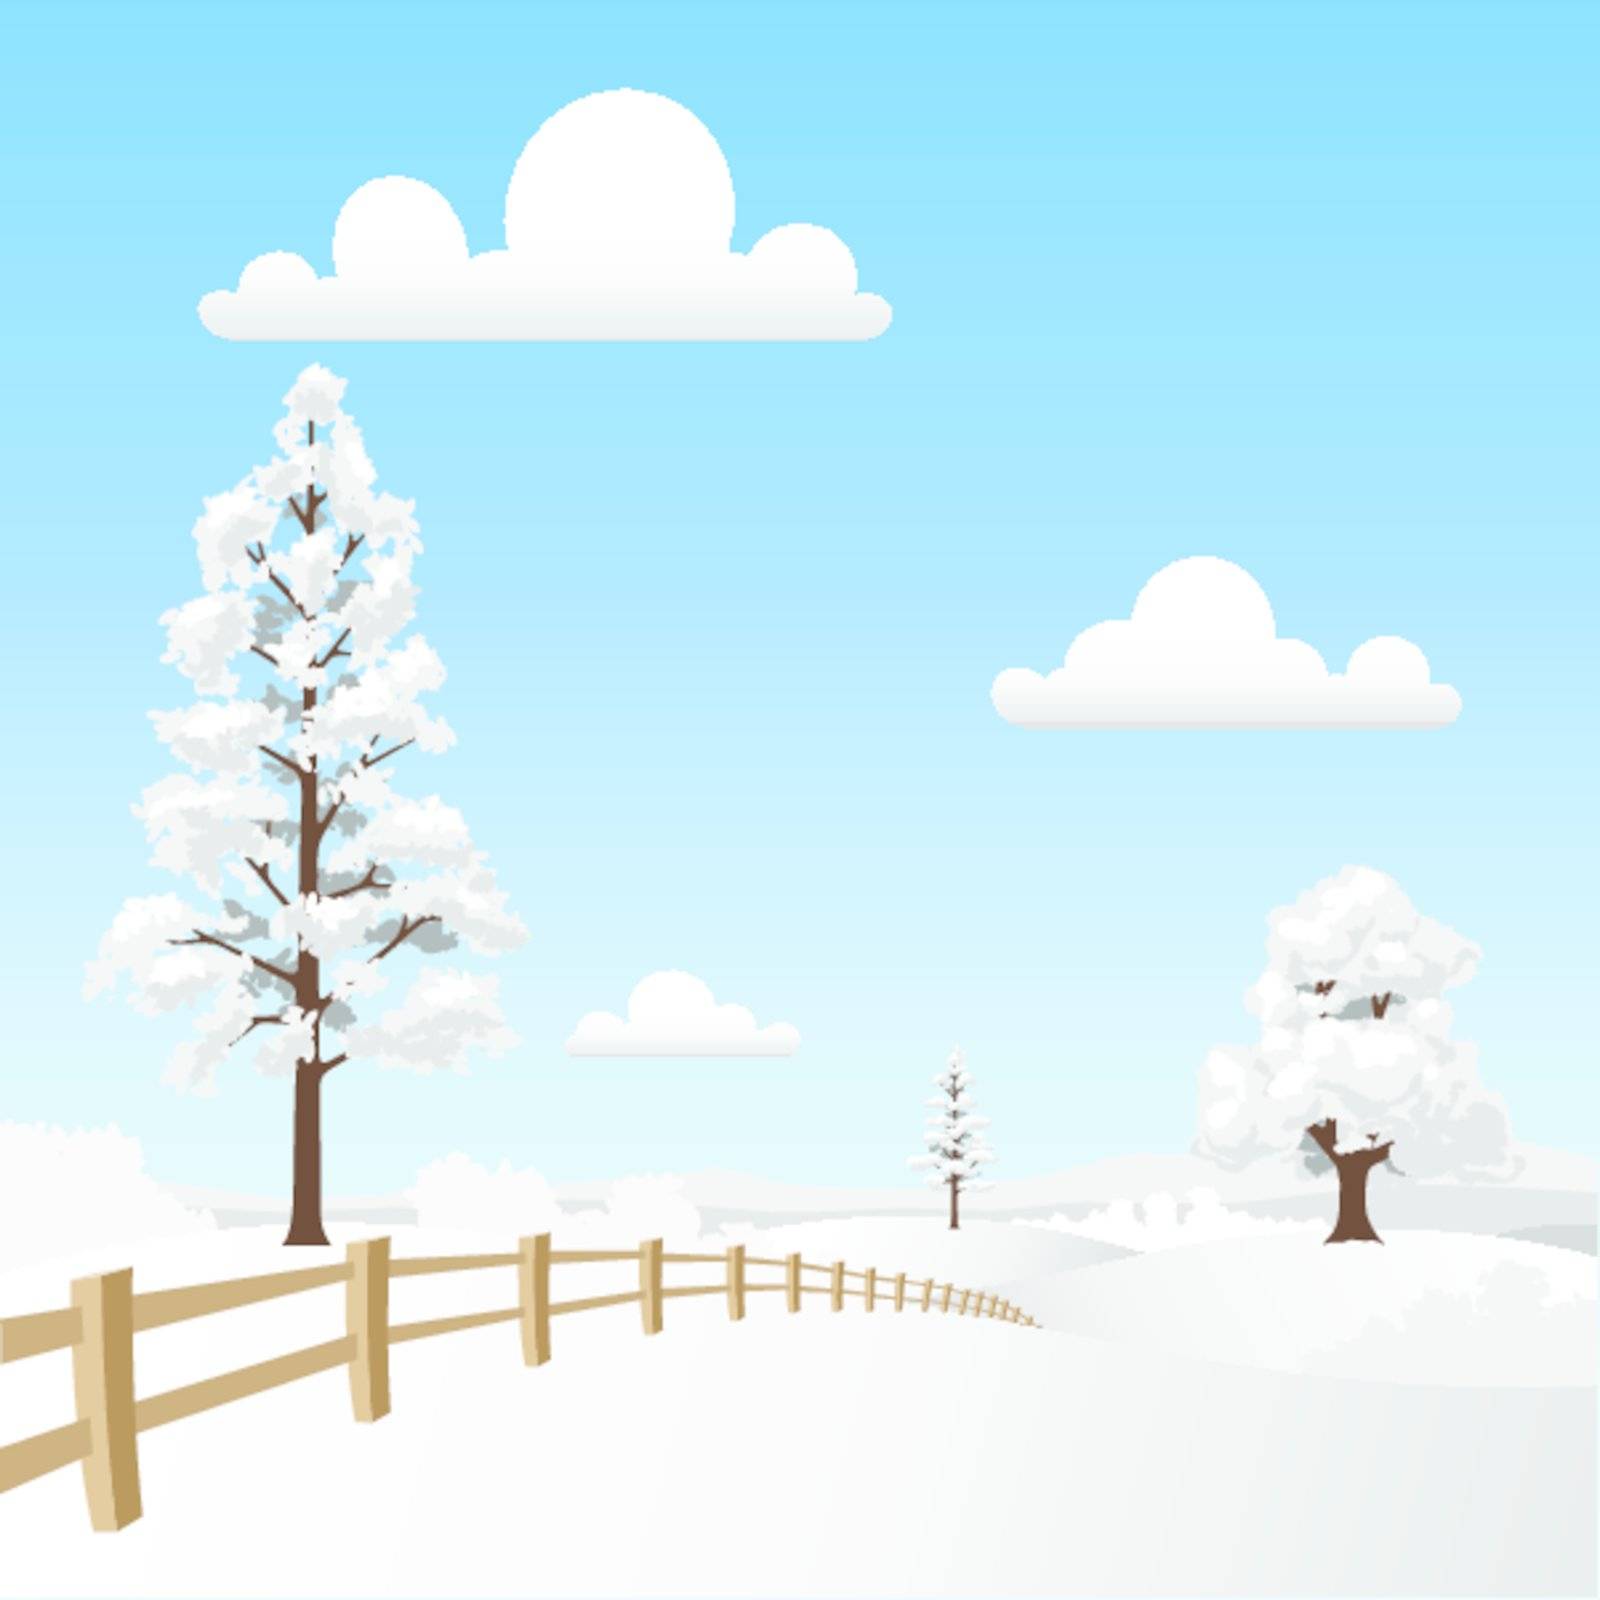 Snow Landscape by Binkski